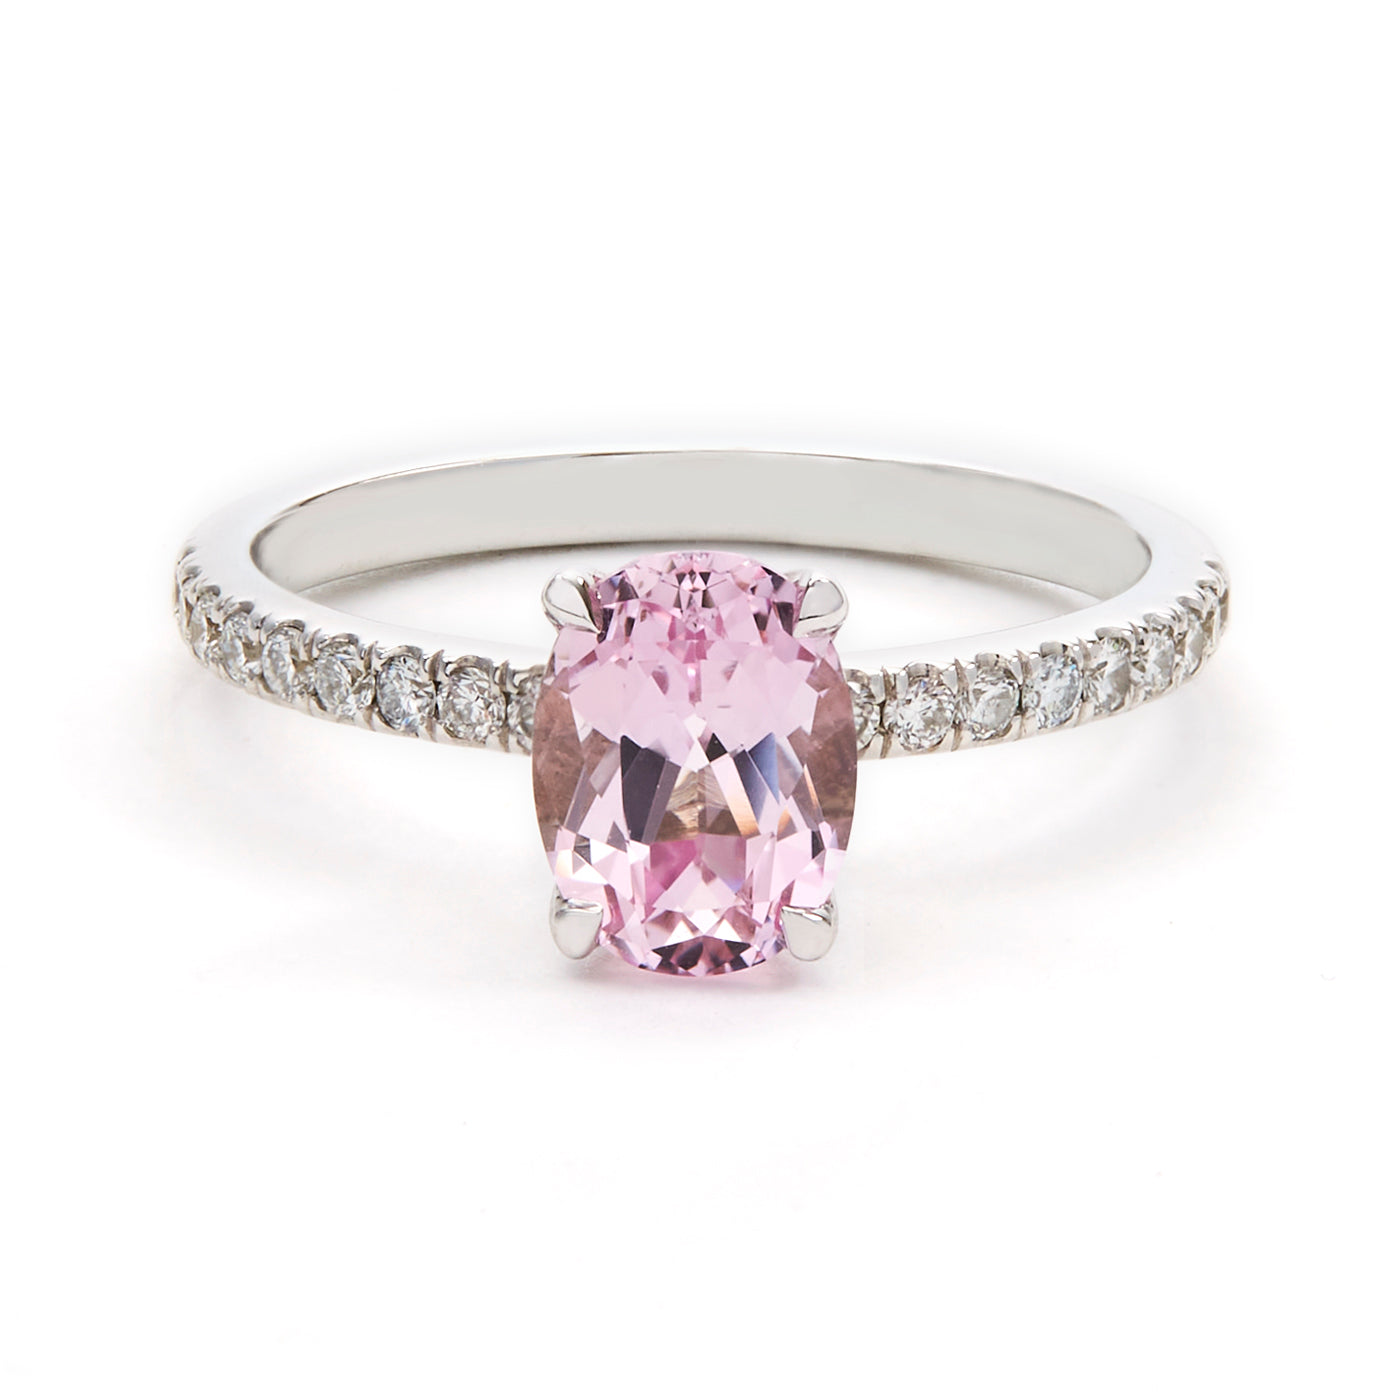 A rare 21.30 carats Type IIa oval-cut fancy light pink diamond and diamond  ring | Alain.R.Truong